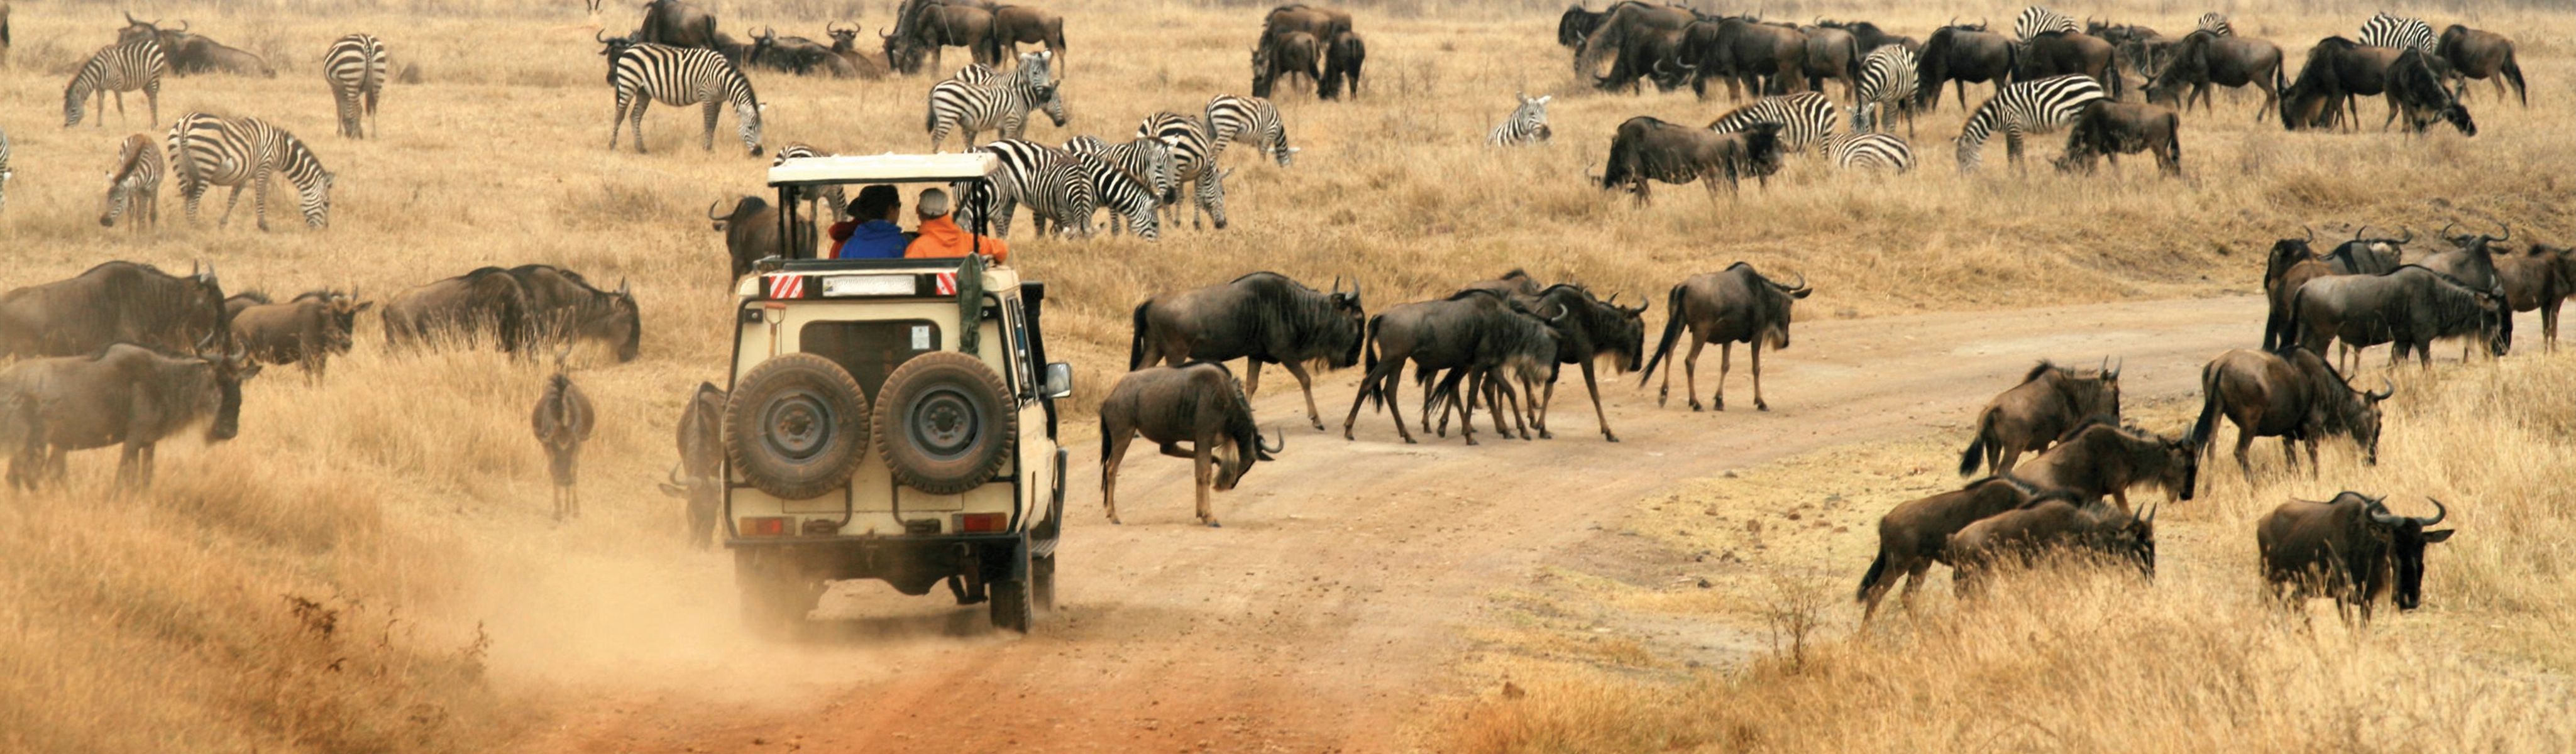 safari kenia november